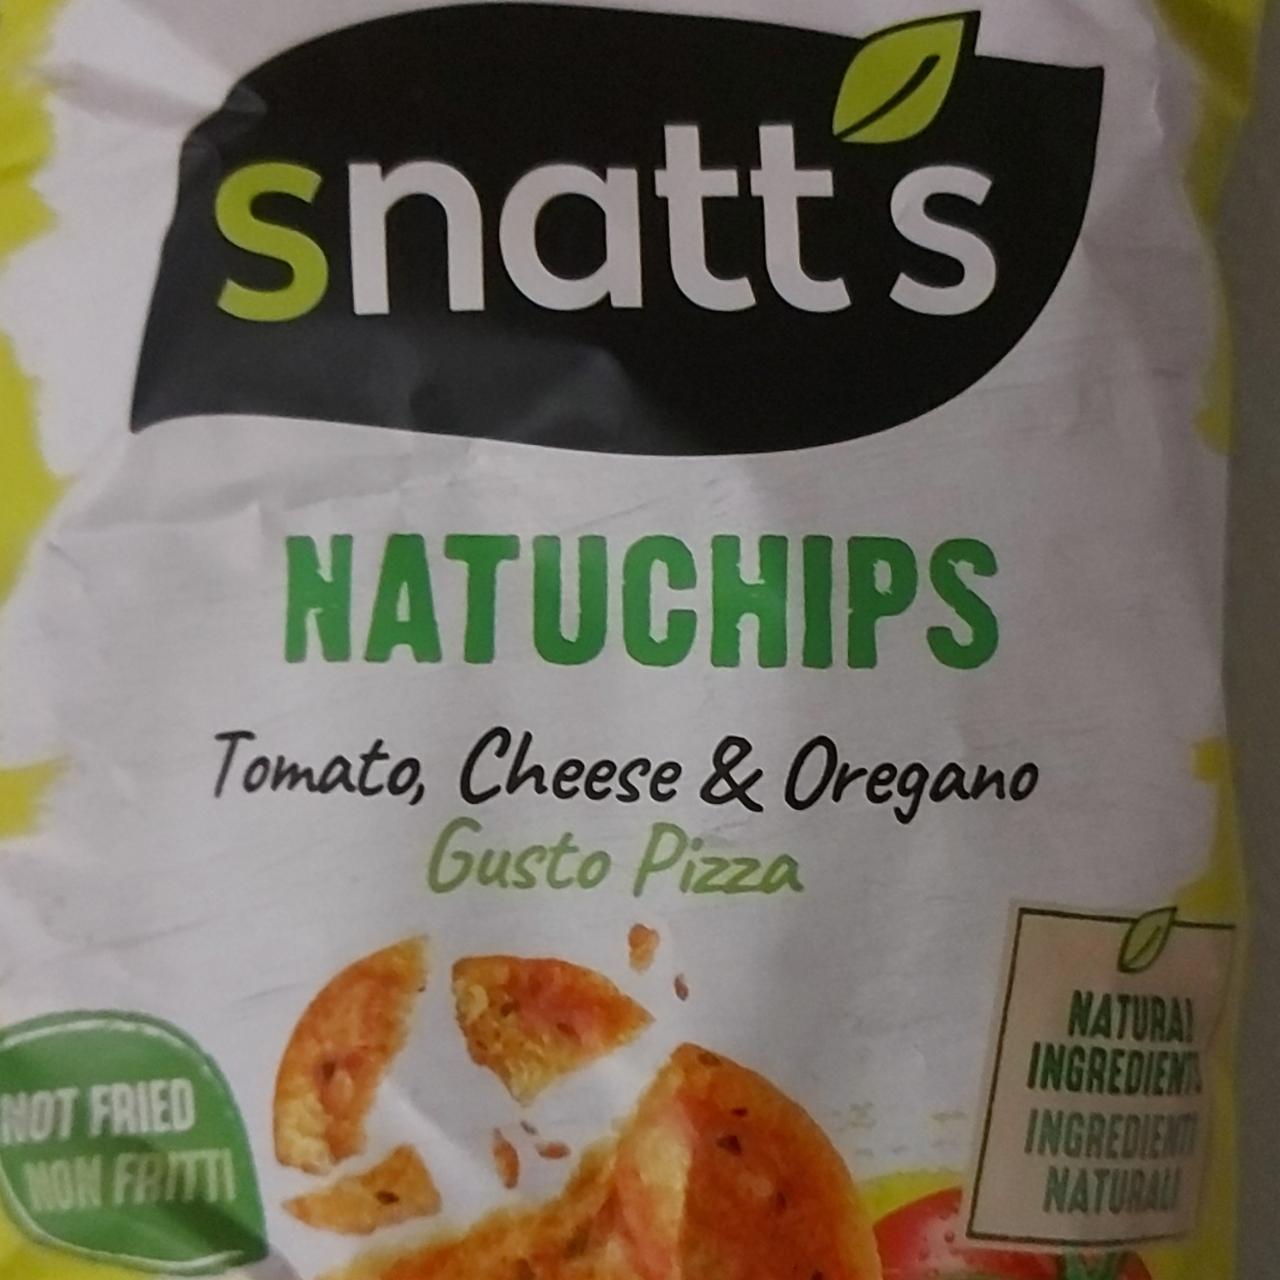 Képek - Natuchips tomato, cheese & oregano Snatt's